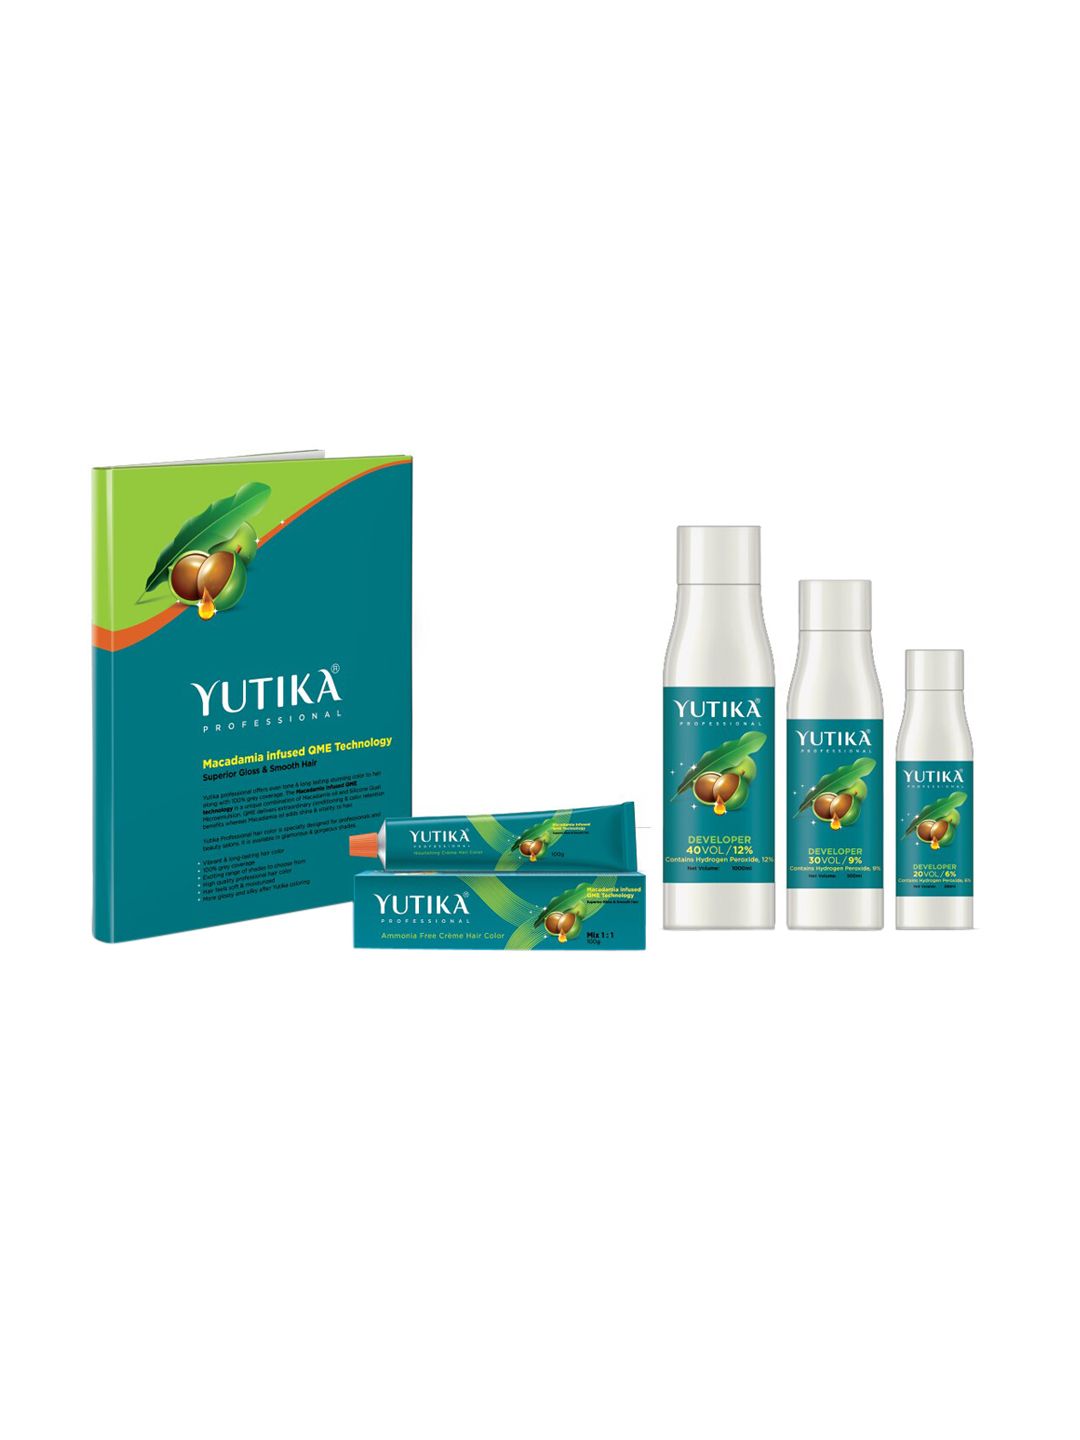 YUTIKA Professional Hair Developer 30 Volume 9%, 250ml Price in India